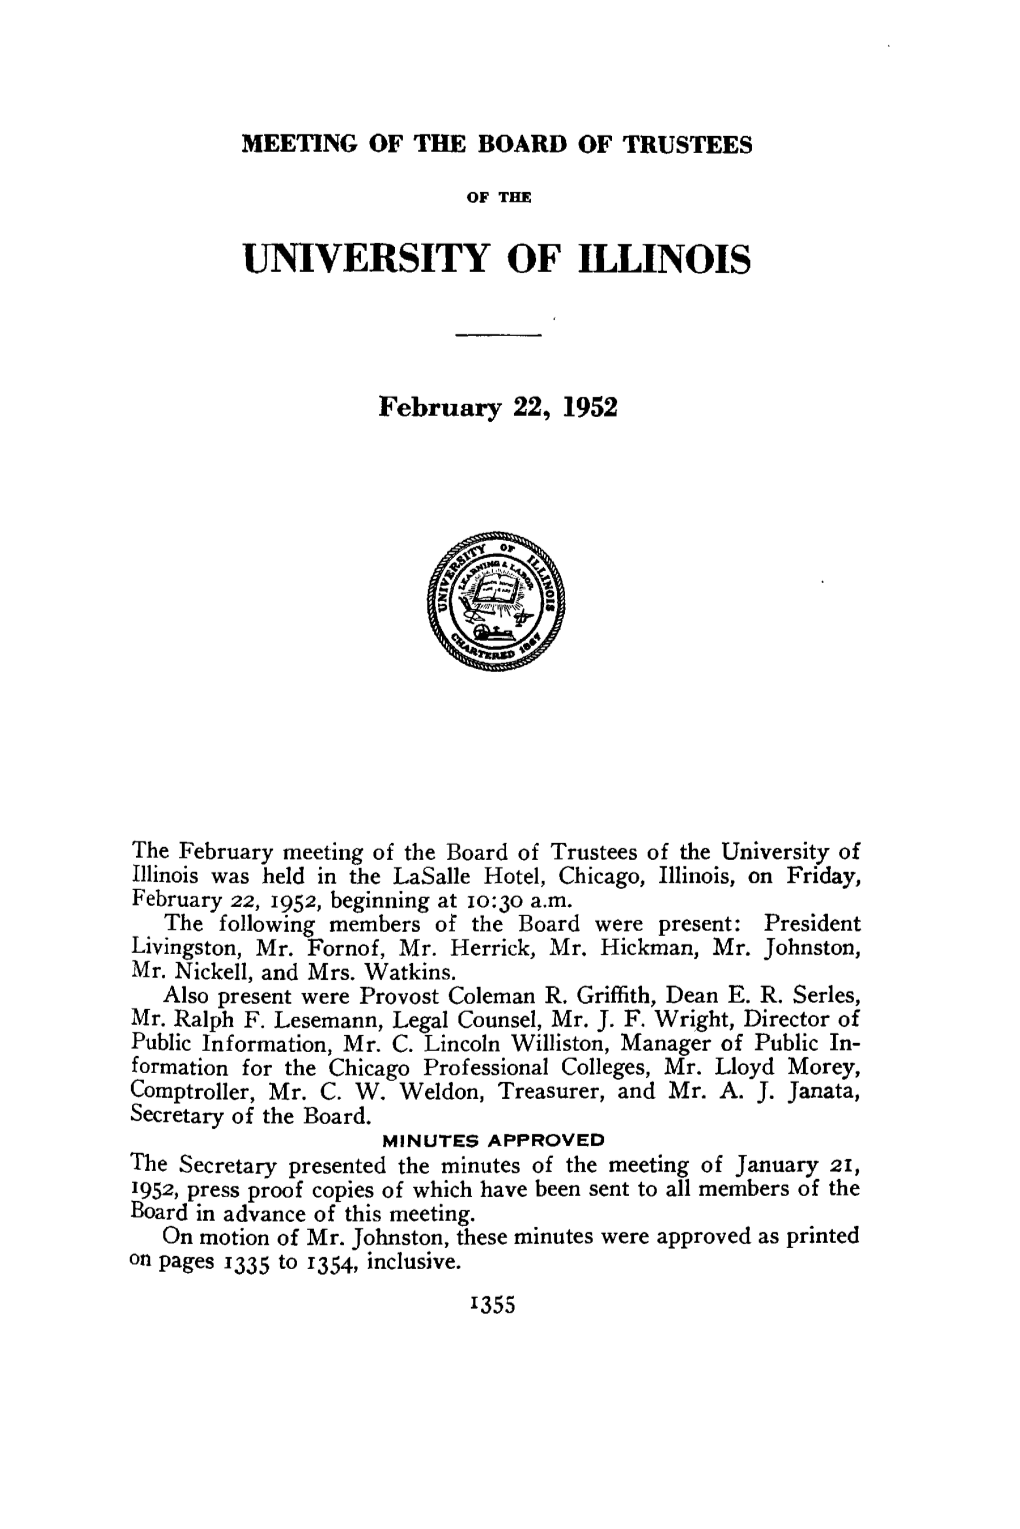 February 22, 1952, Minutes | UI Board of Trustees